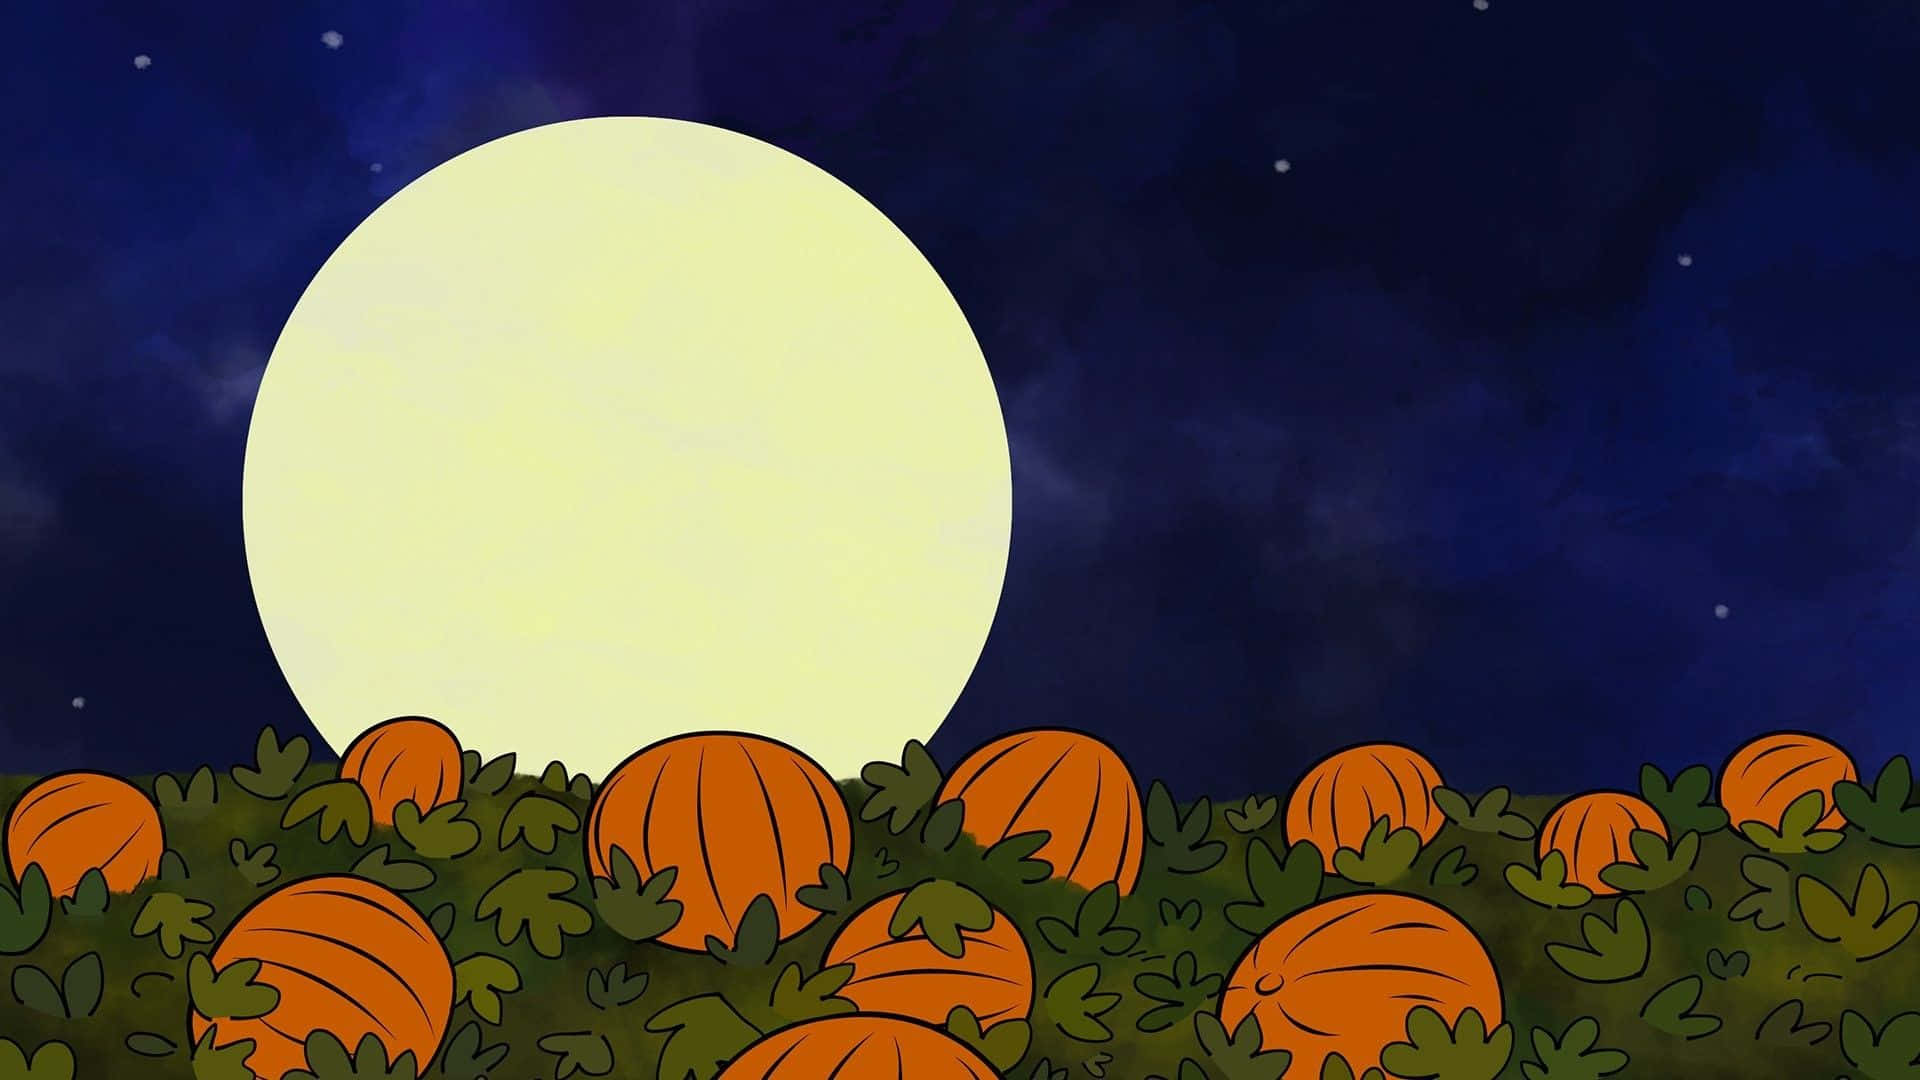 a cartoon pumpkin field with a full moon